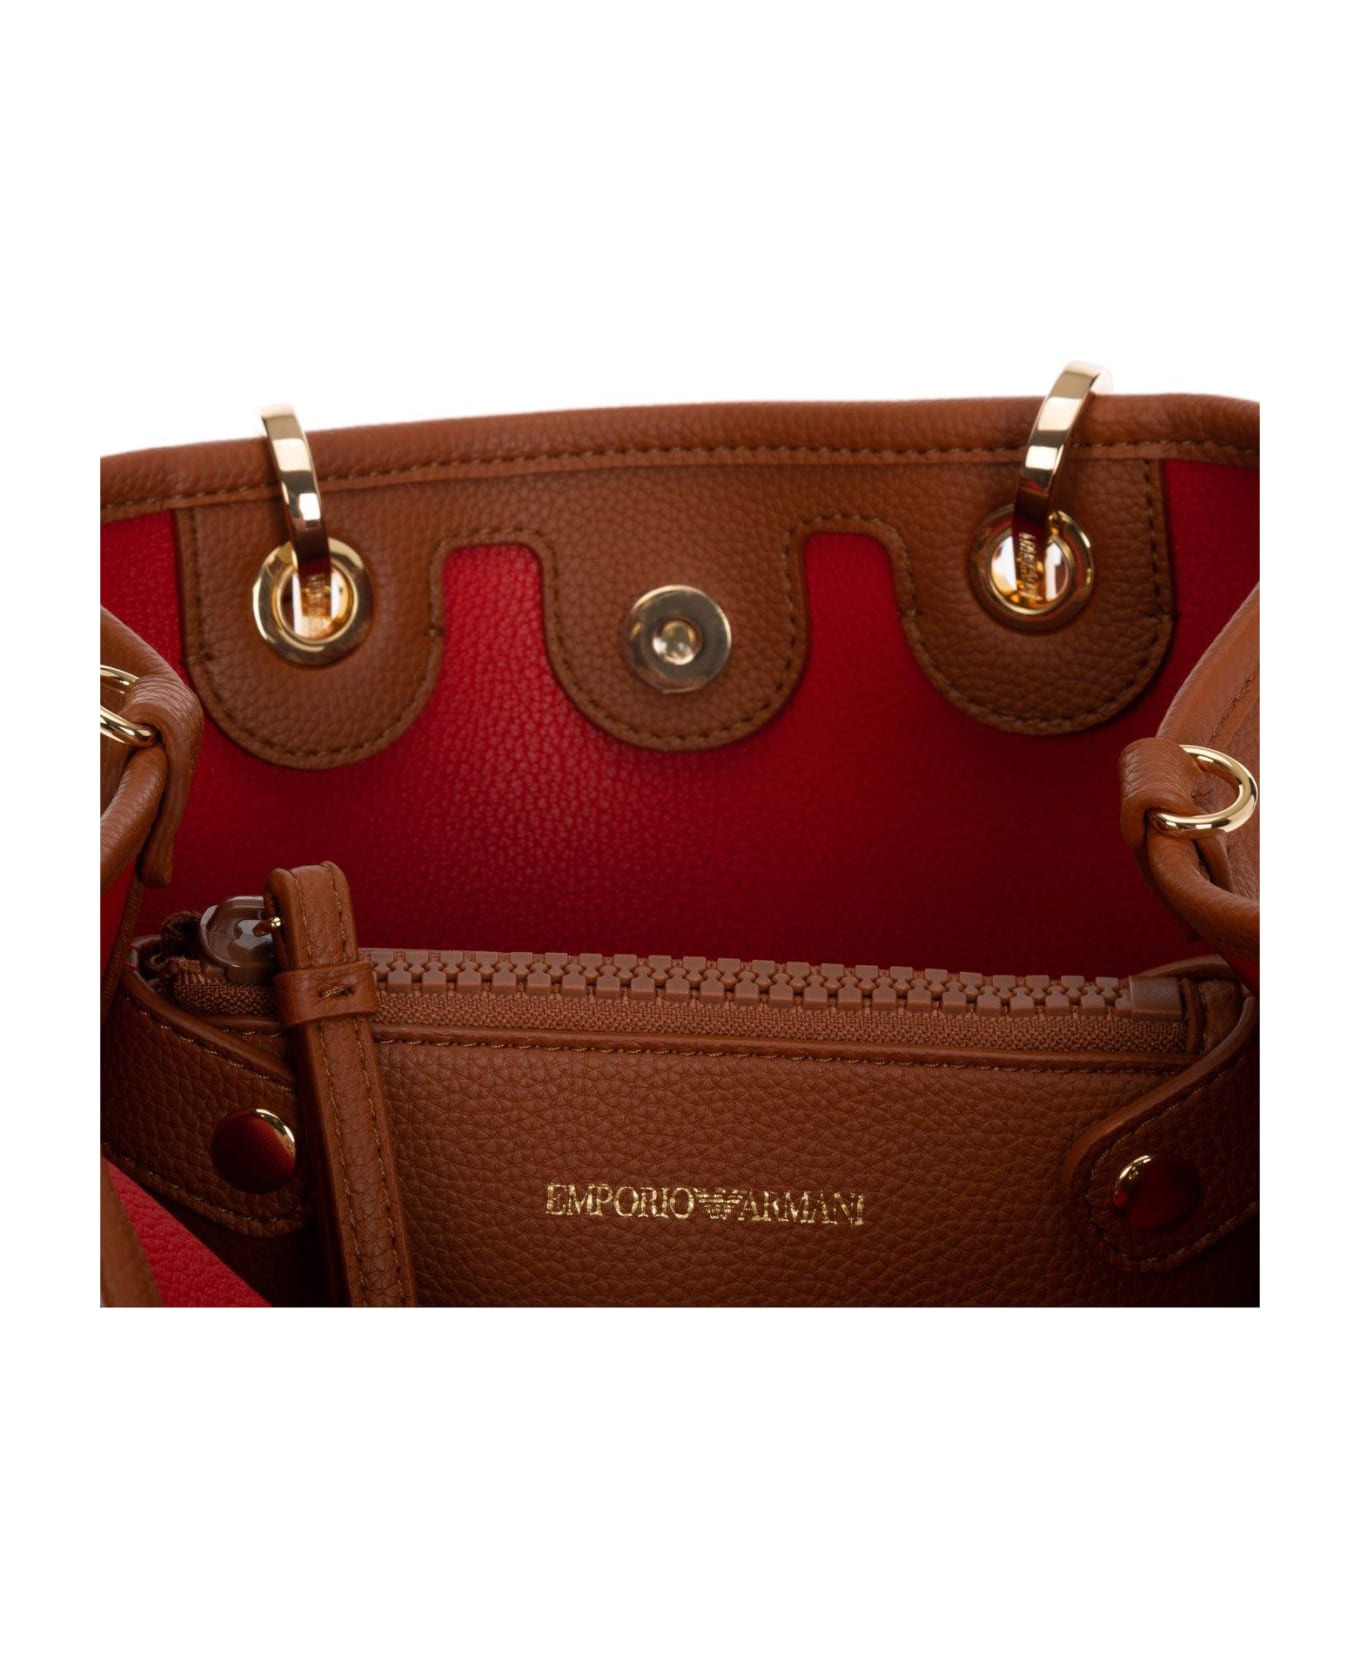 Emporio Armani Logo Detailed Handbag - Leather